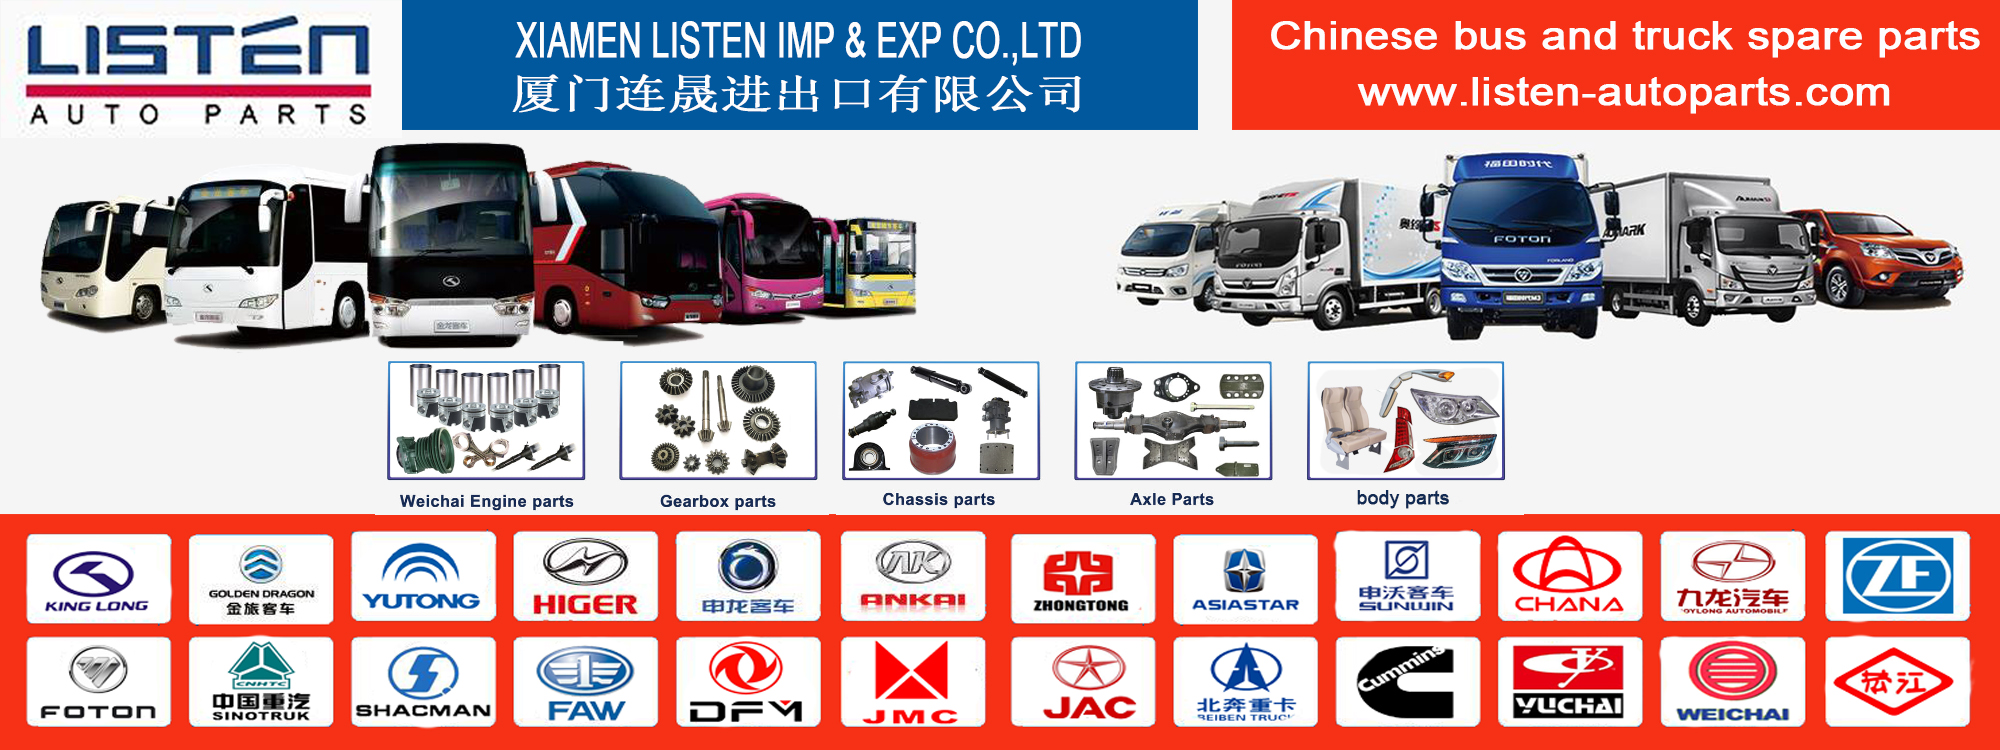 Xiamen Ascolta Imp & Exp Co., Ltd